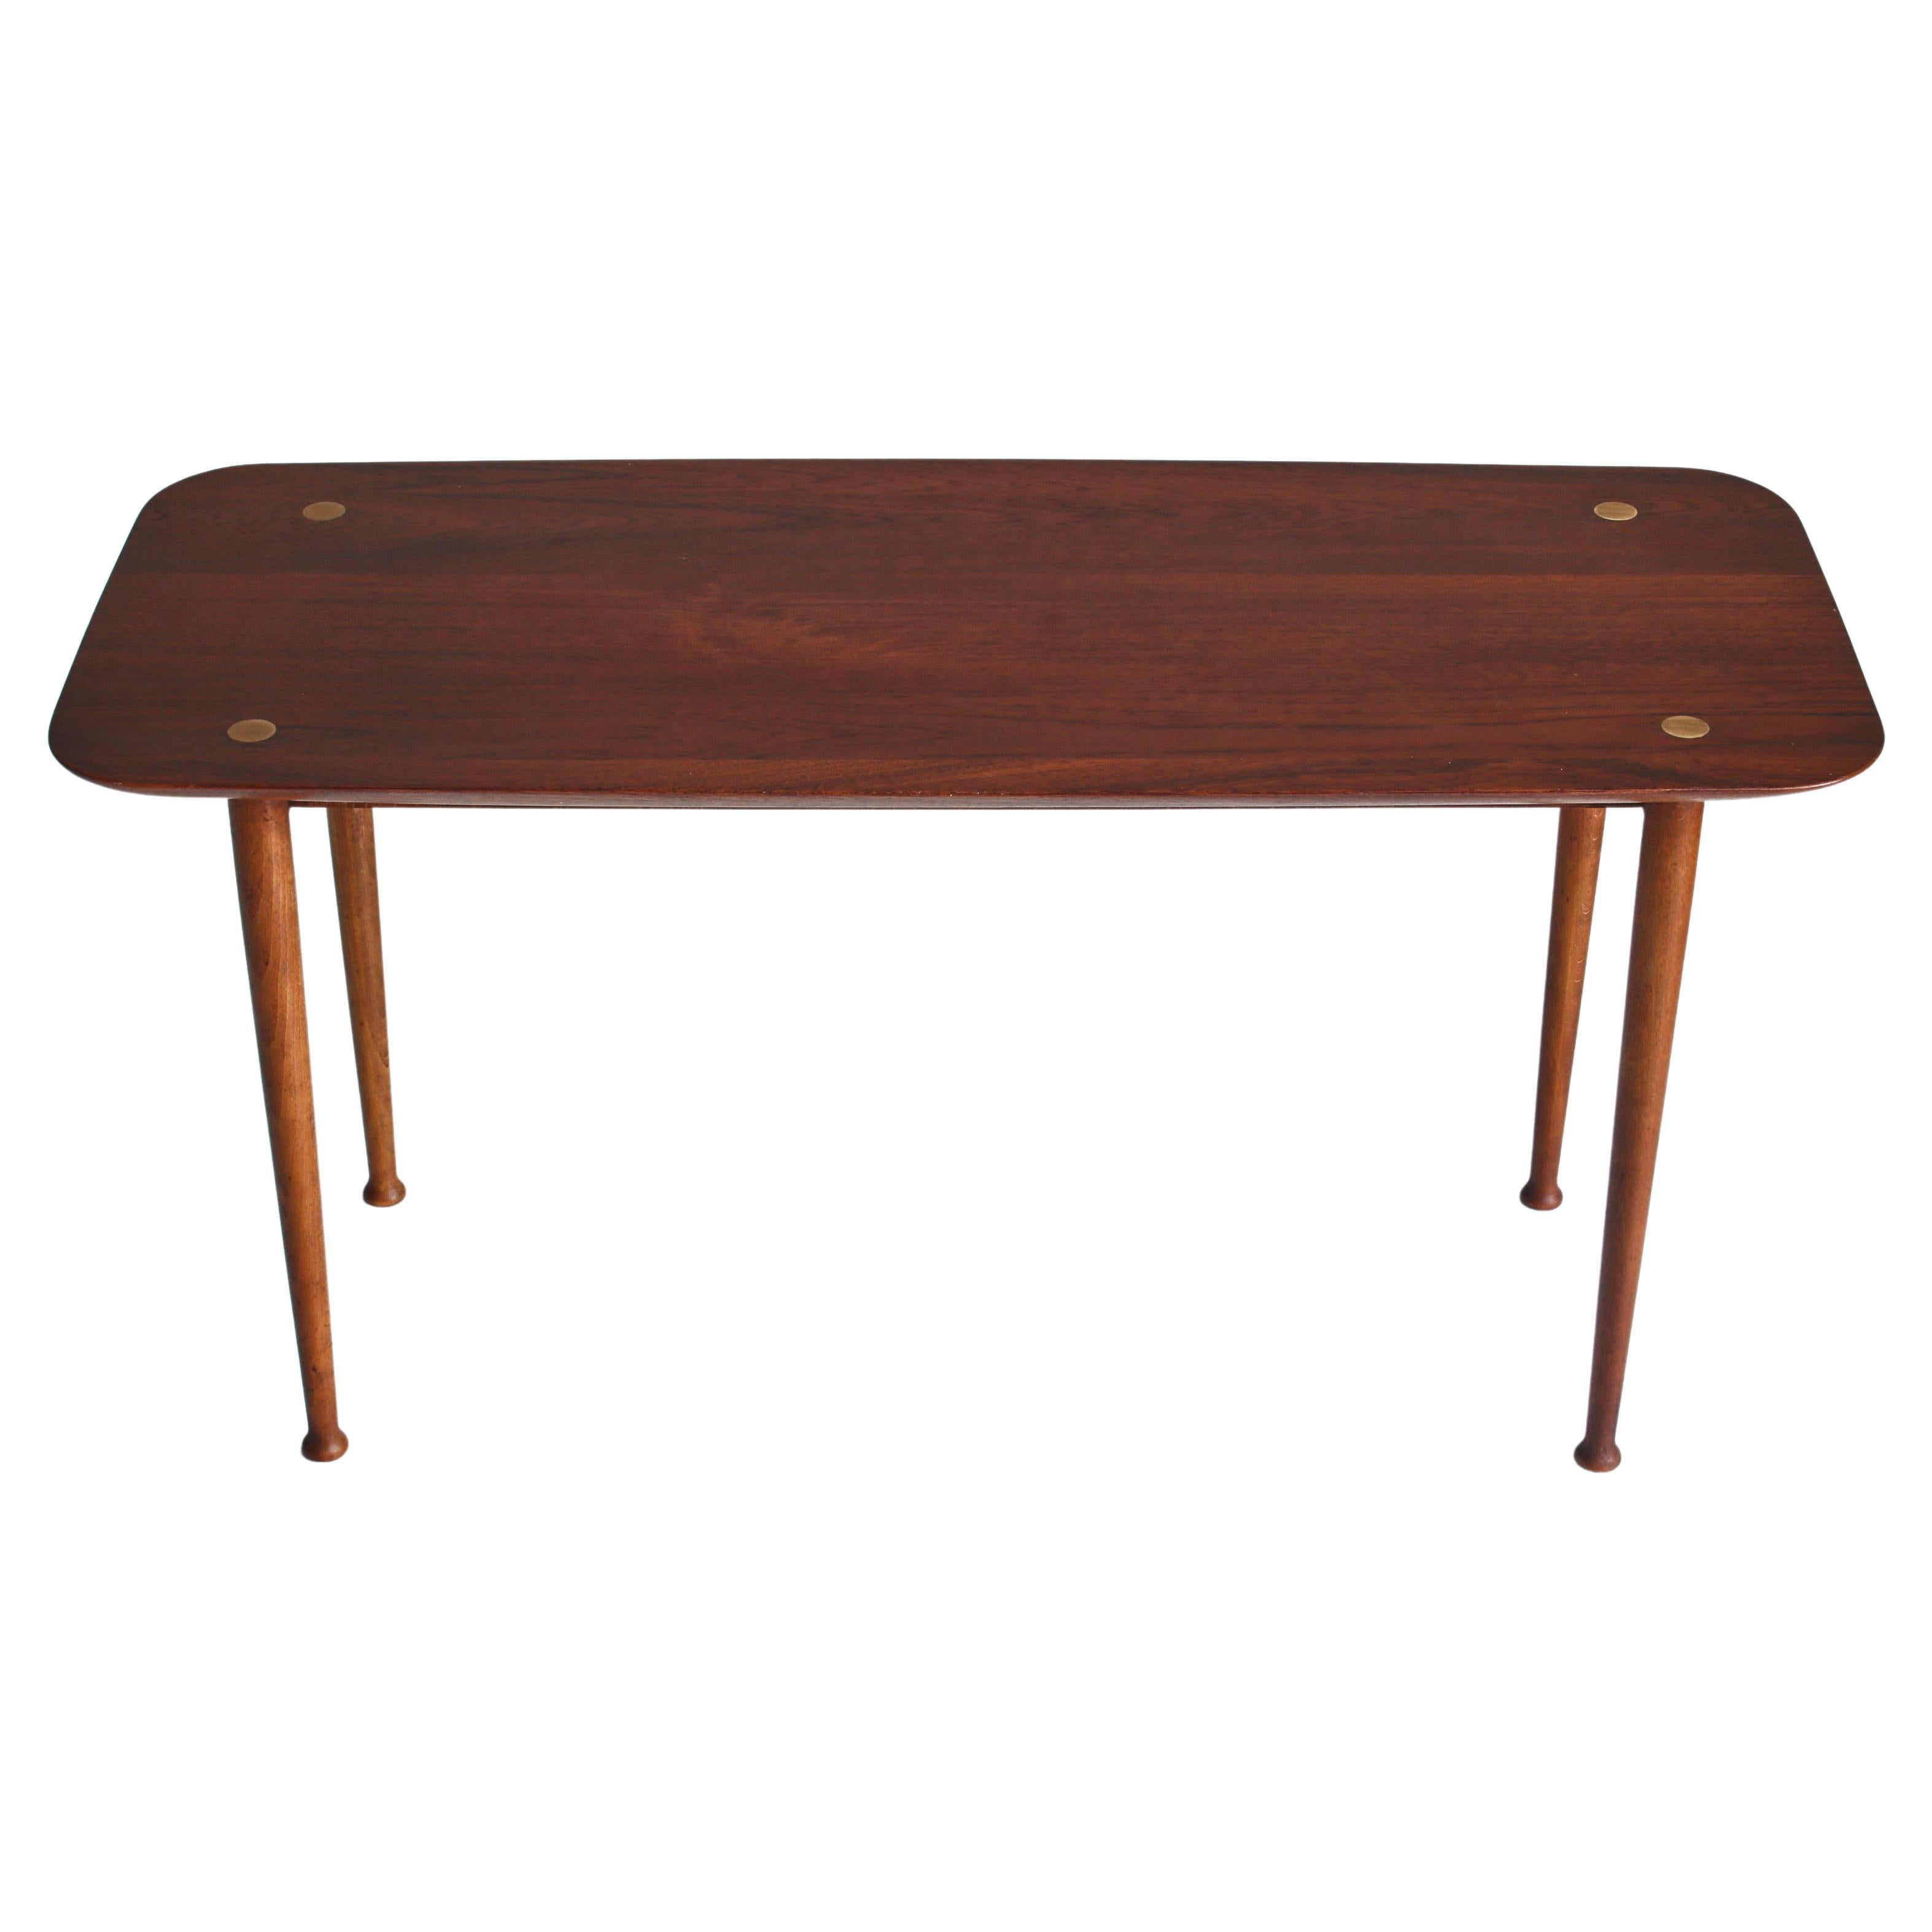 1950s Scandinavian Side Table by Danish Cabinetmaker in Teakwood and Beech For Sale